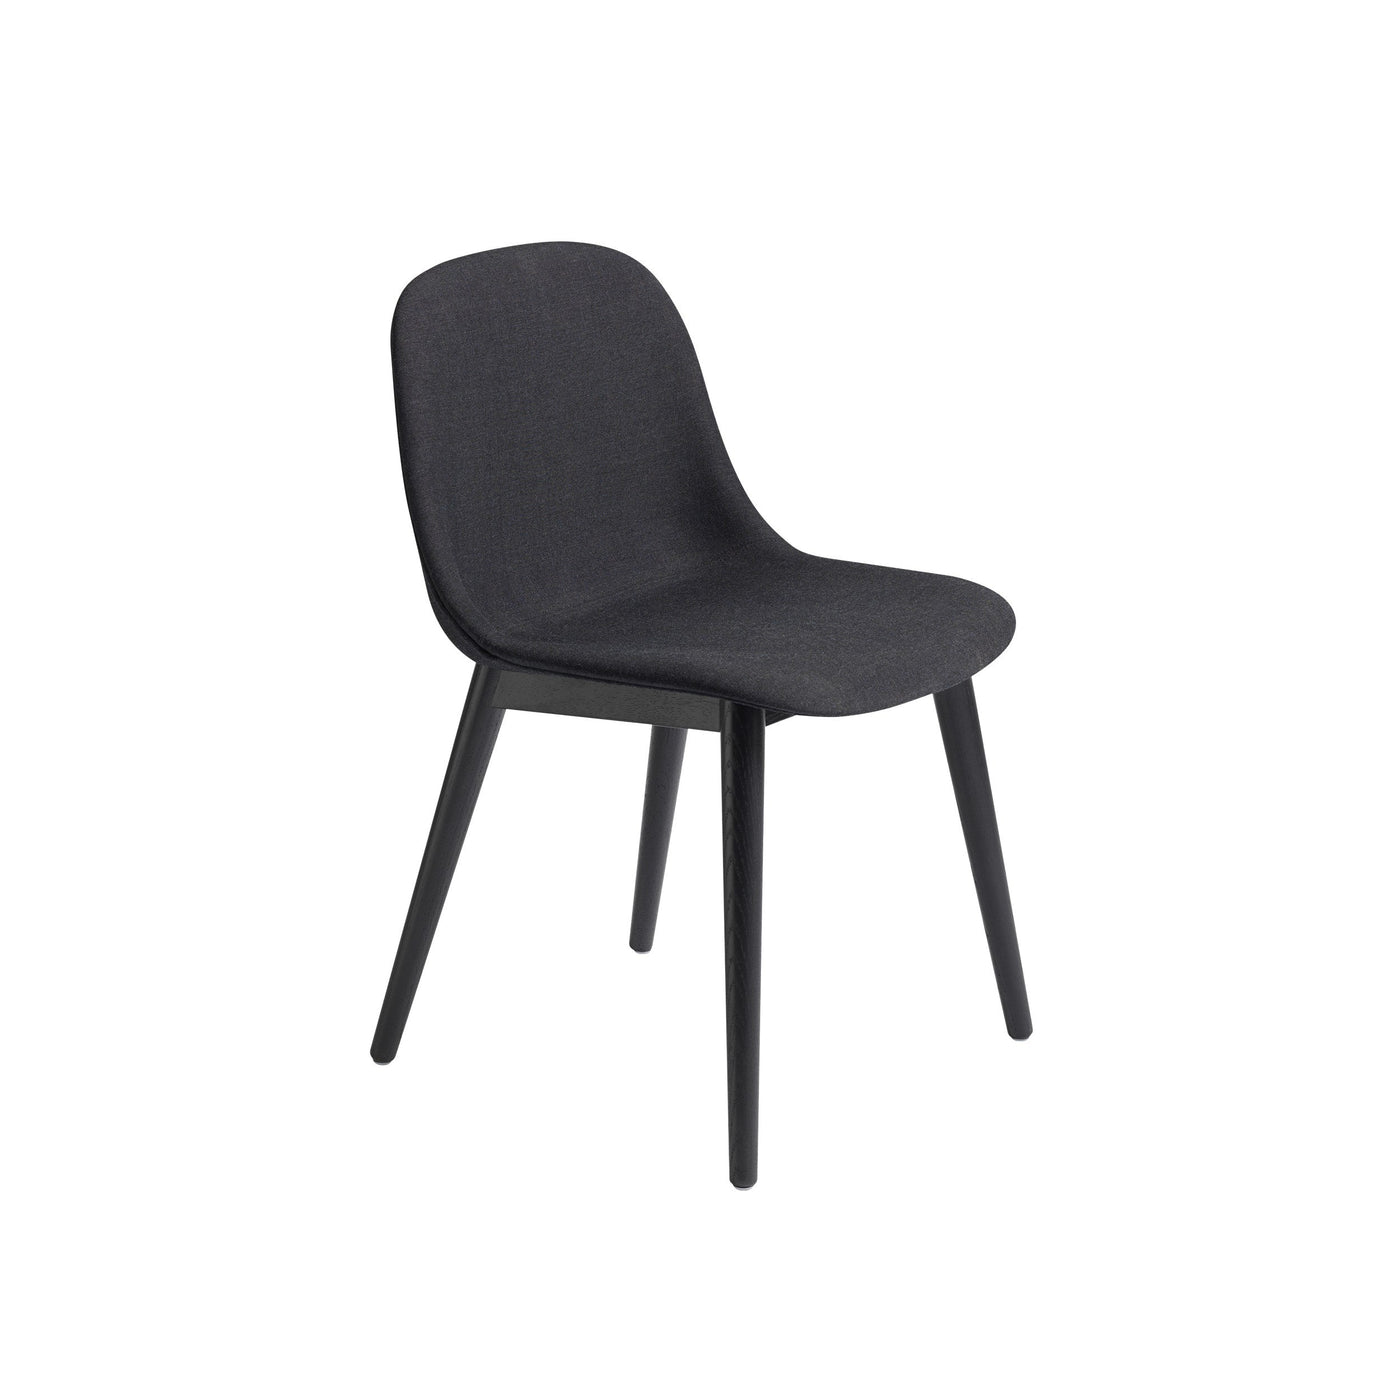 fiber side chair | wood base